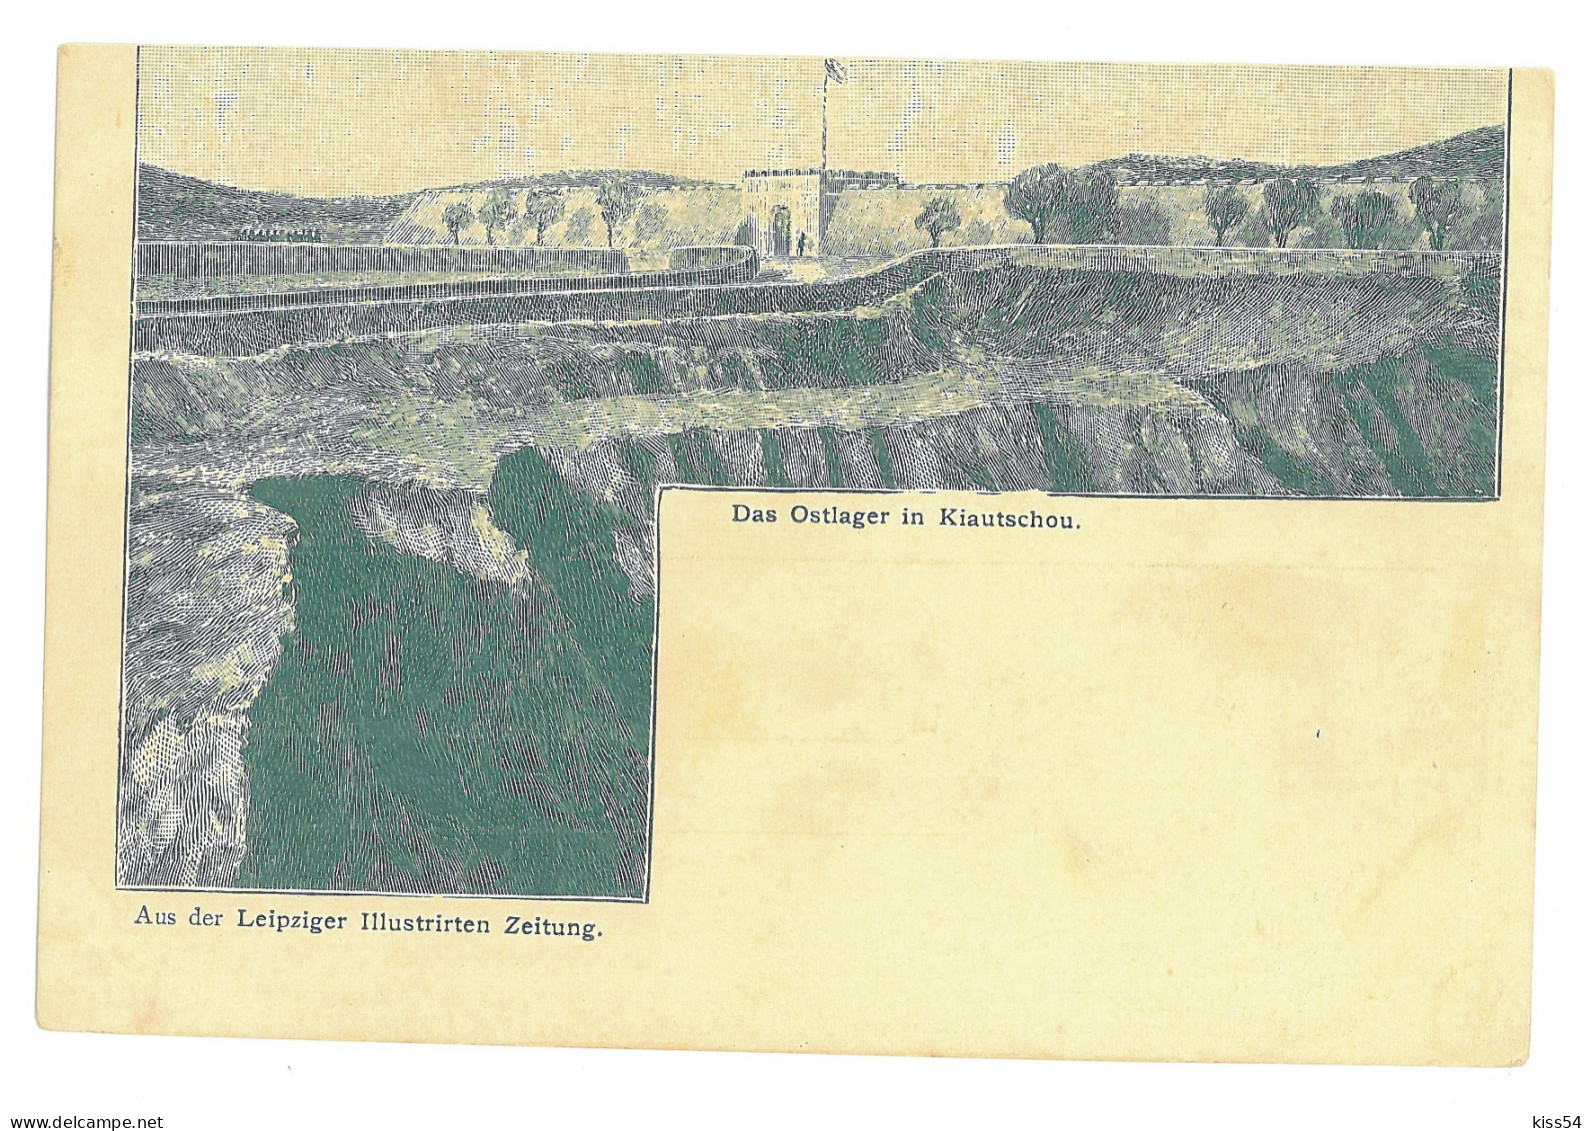 CH 79 - 19336 KIAUTSCHOU CAMP. Litho, China - Old Postcard - Unused - China